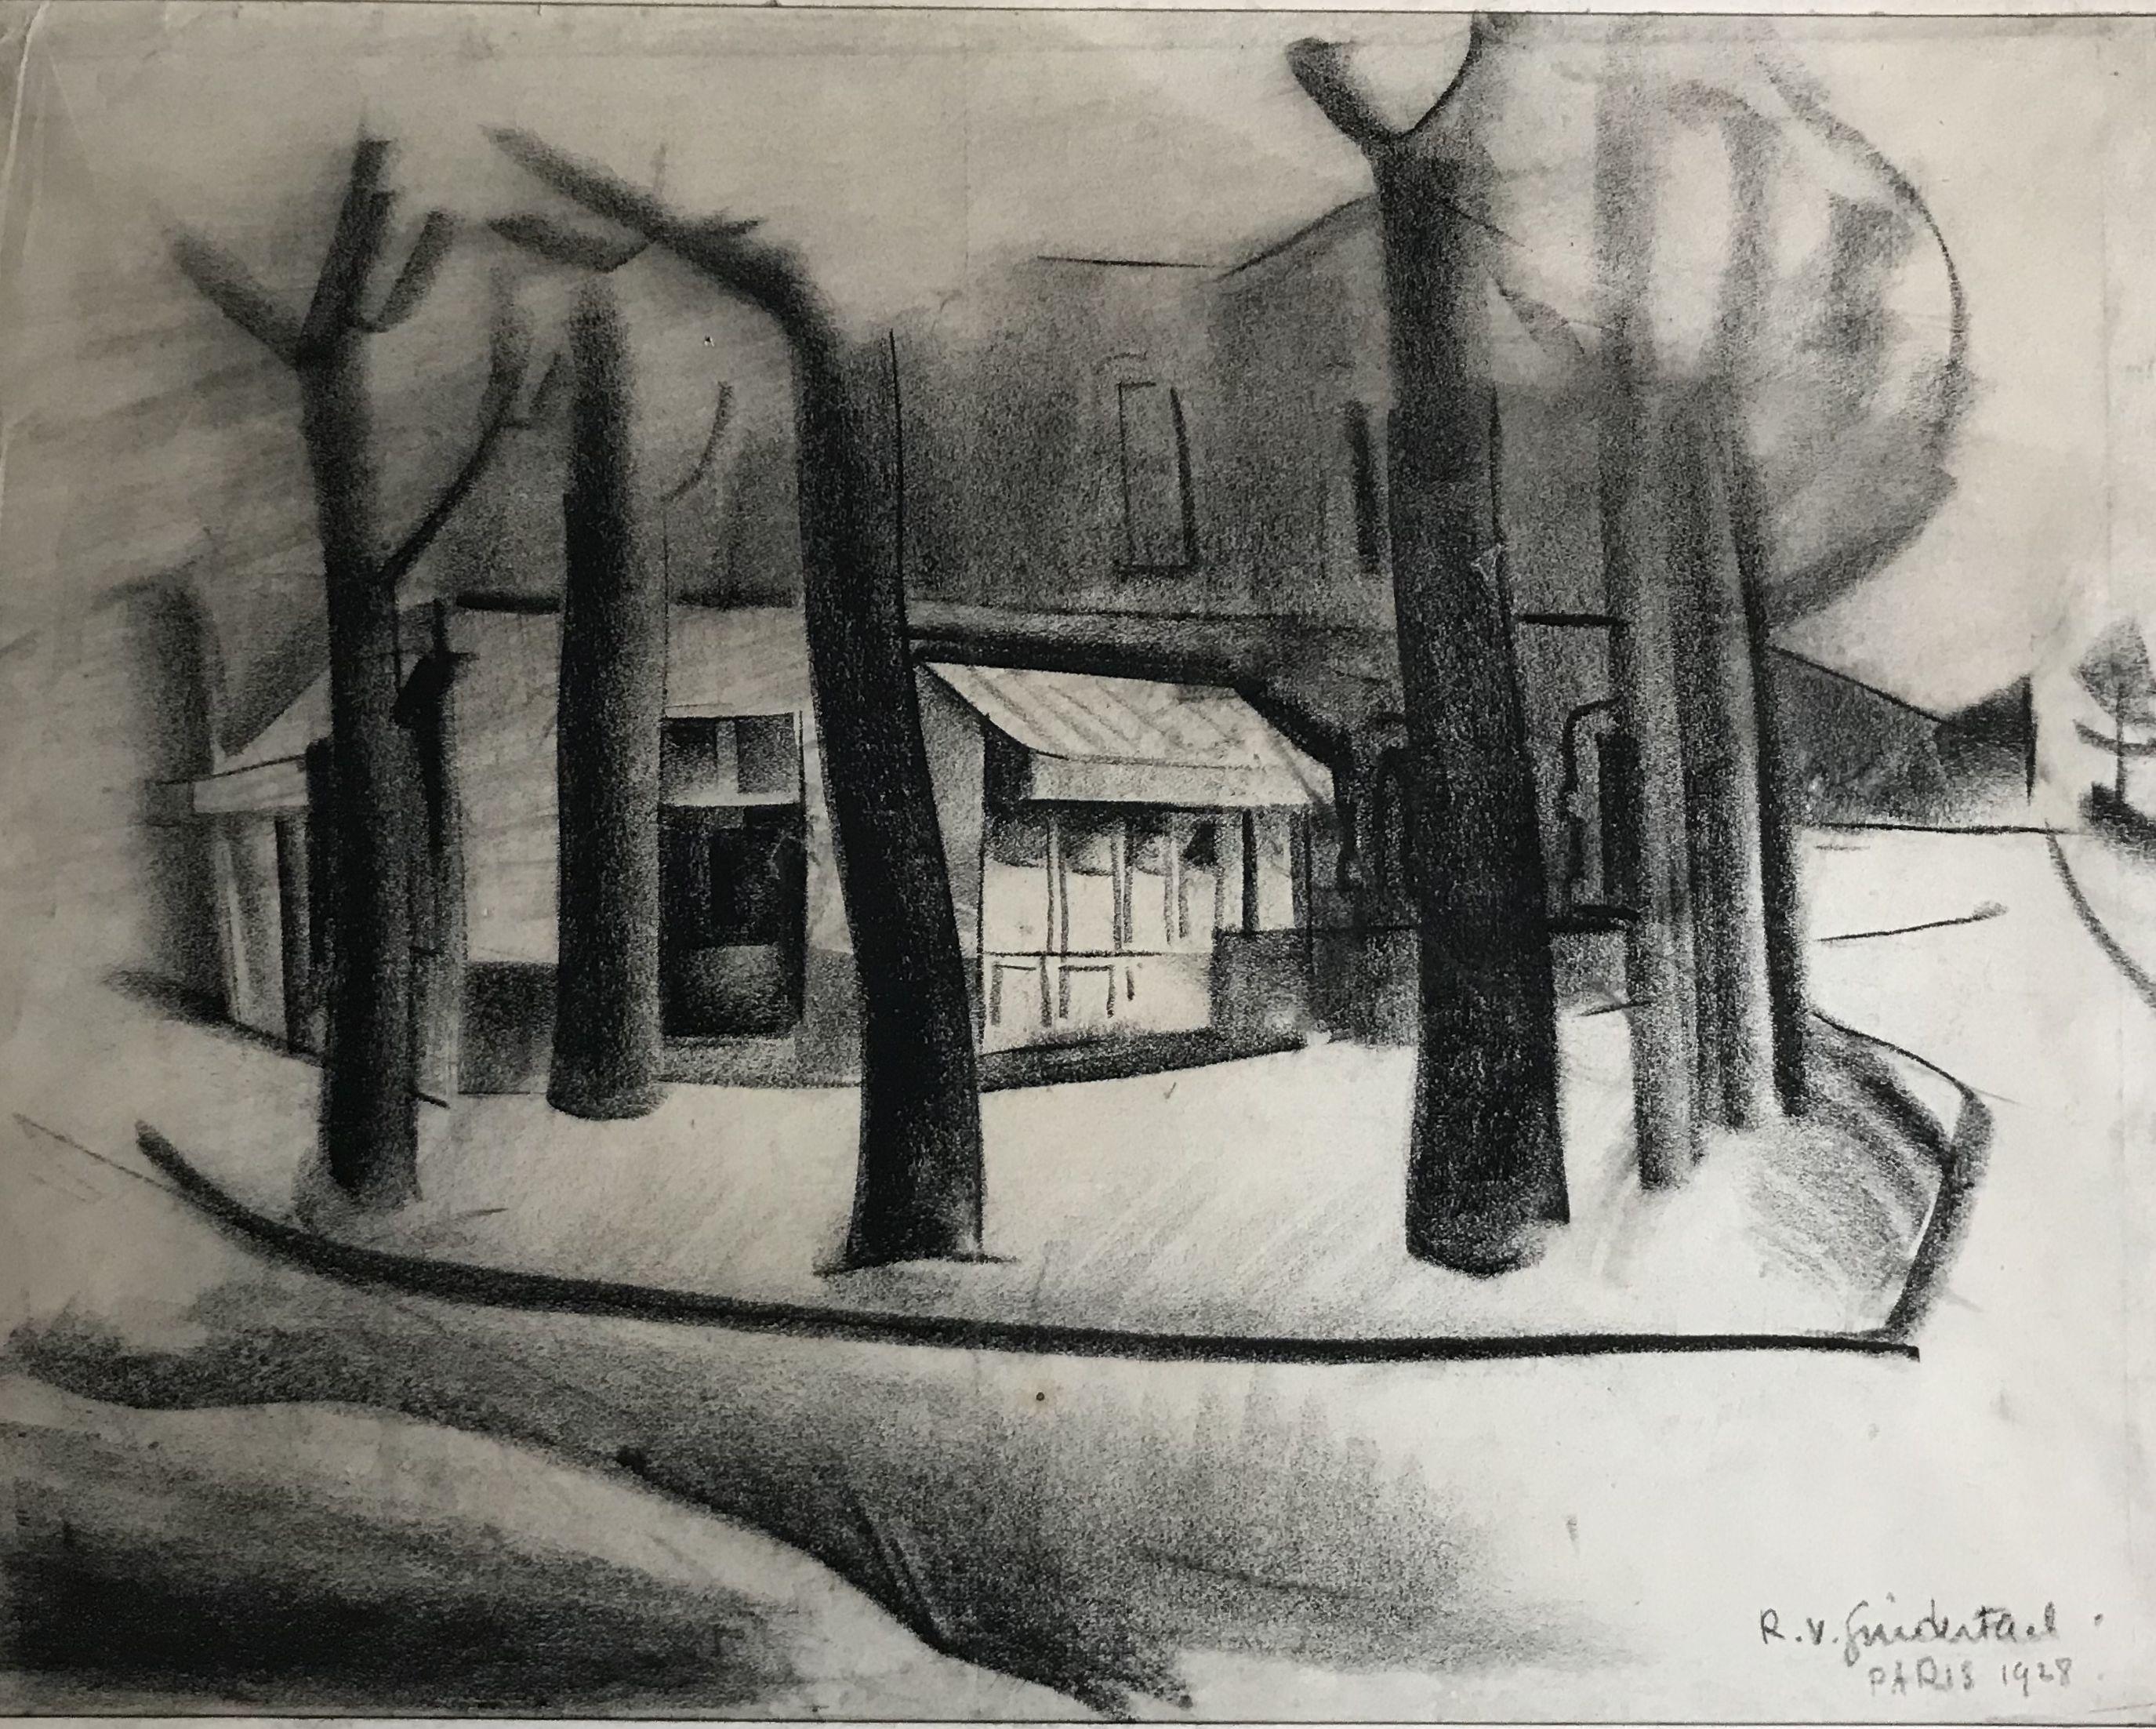 Roger Van Gindertaal Landscape Art - Roger VAN GINDERTAEL. Paris street view. Charcoal drawing. Signed / dated 1928.